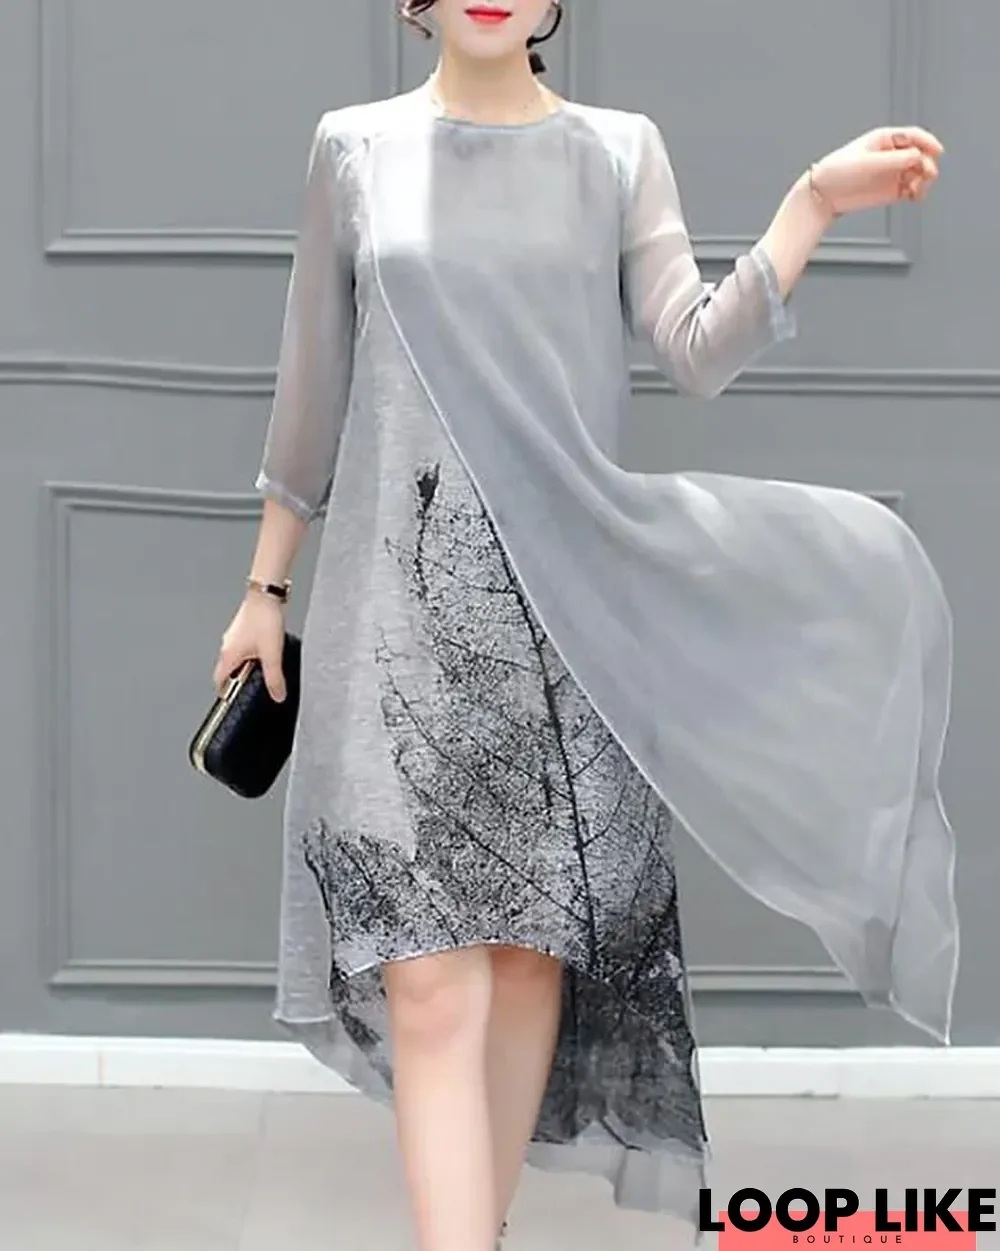 Women's Chiffon Dress Knee Length Dress - 3/4 Length Sleeve Print Layered Summer Plus Size Hot Going Out Gray